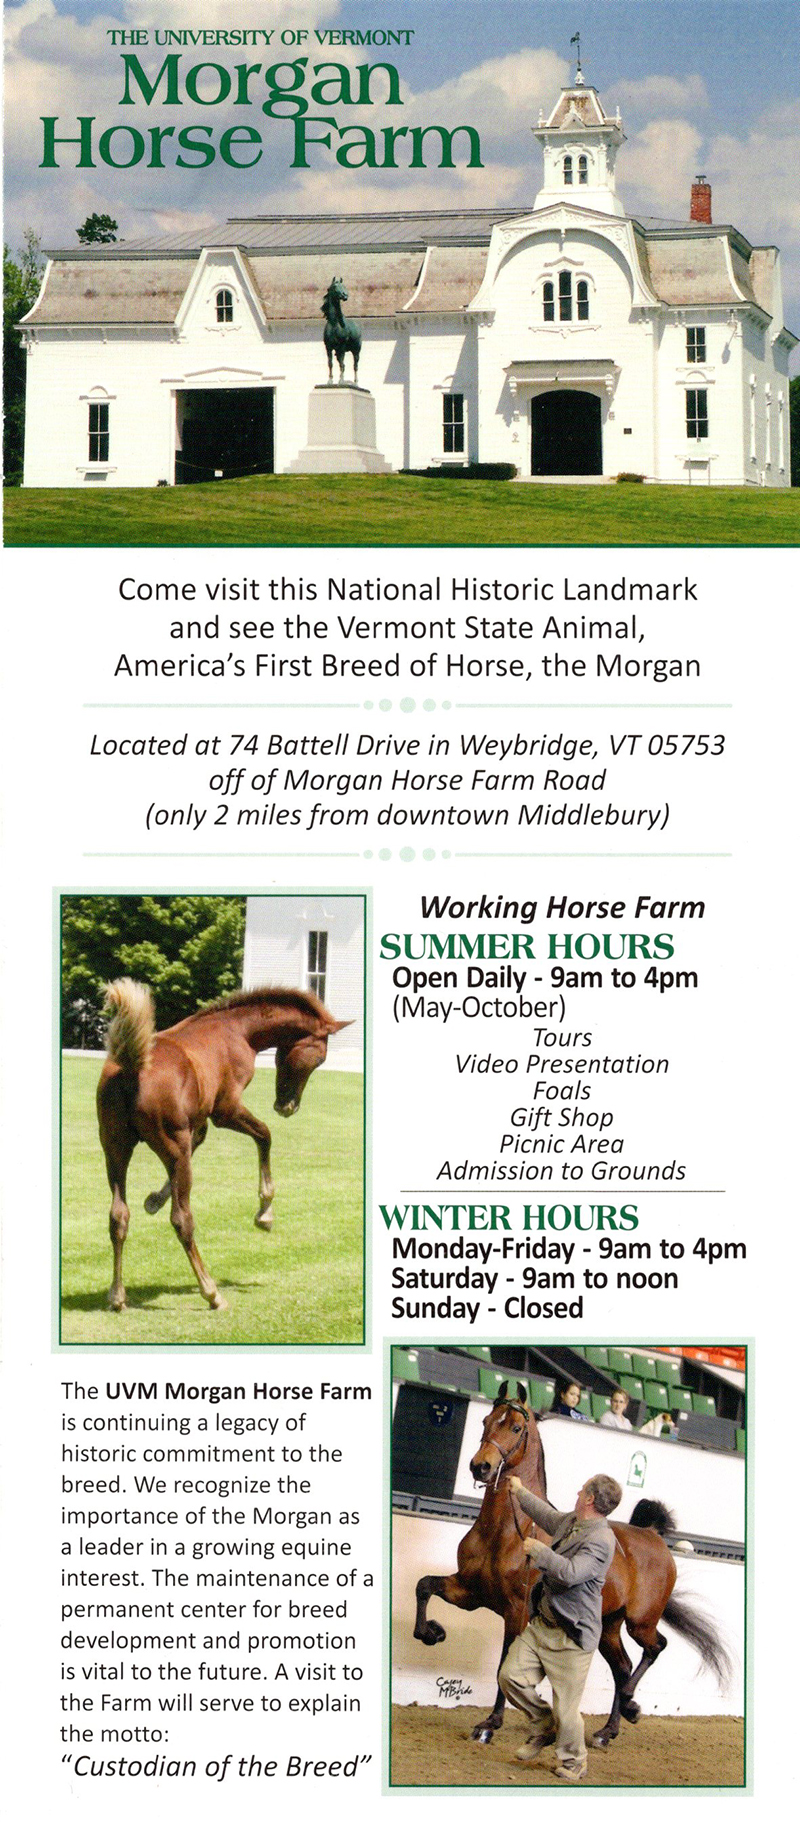 Morgan Horse Farm brochure thumbnail